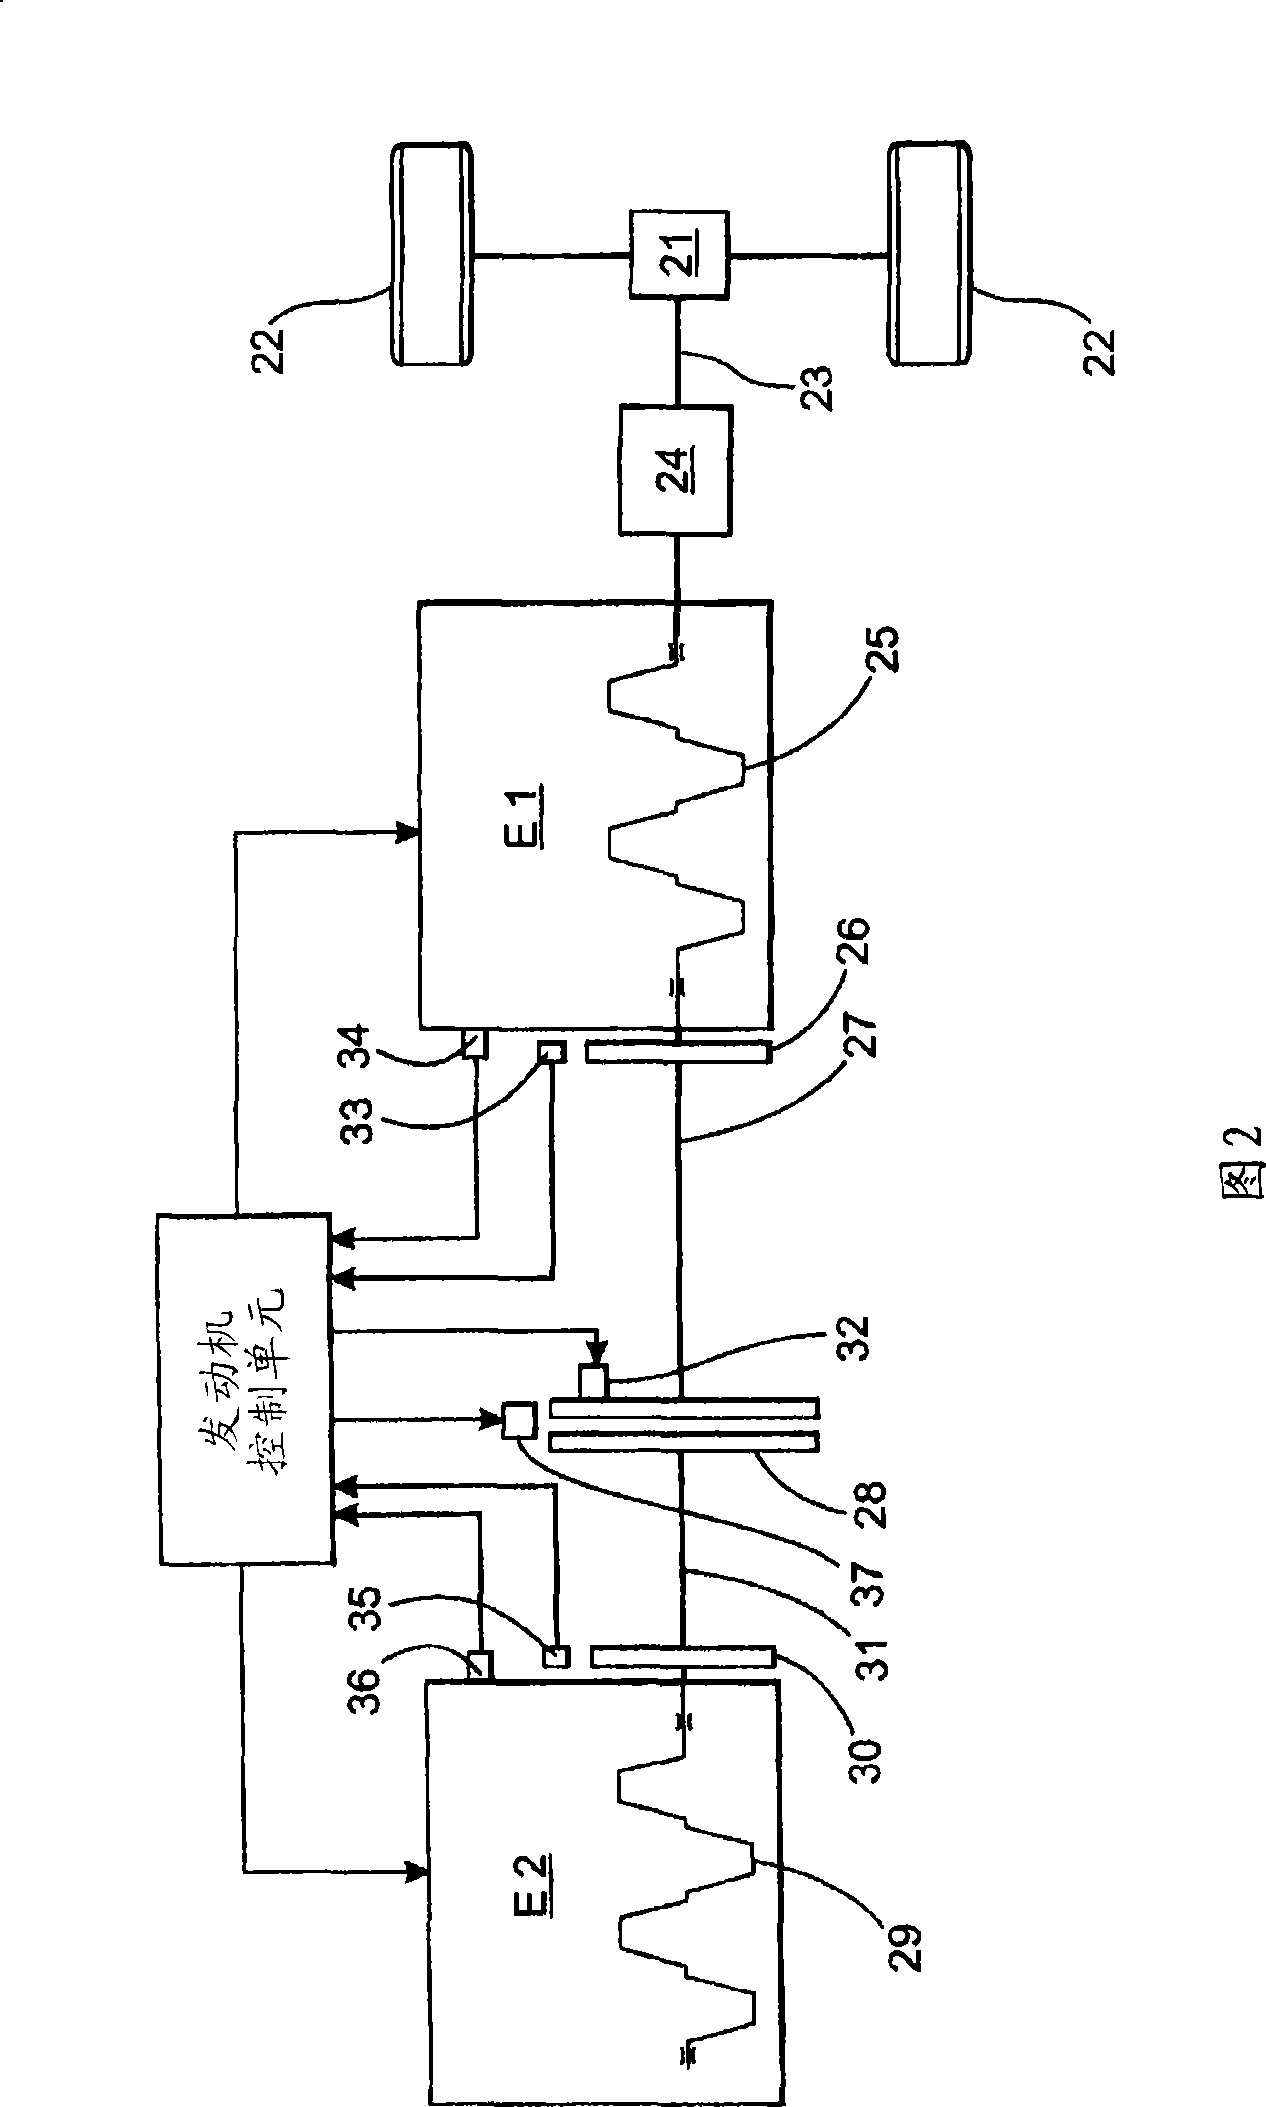 Engine arrangement